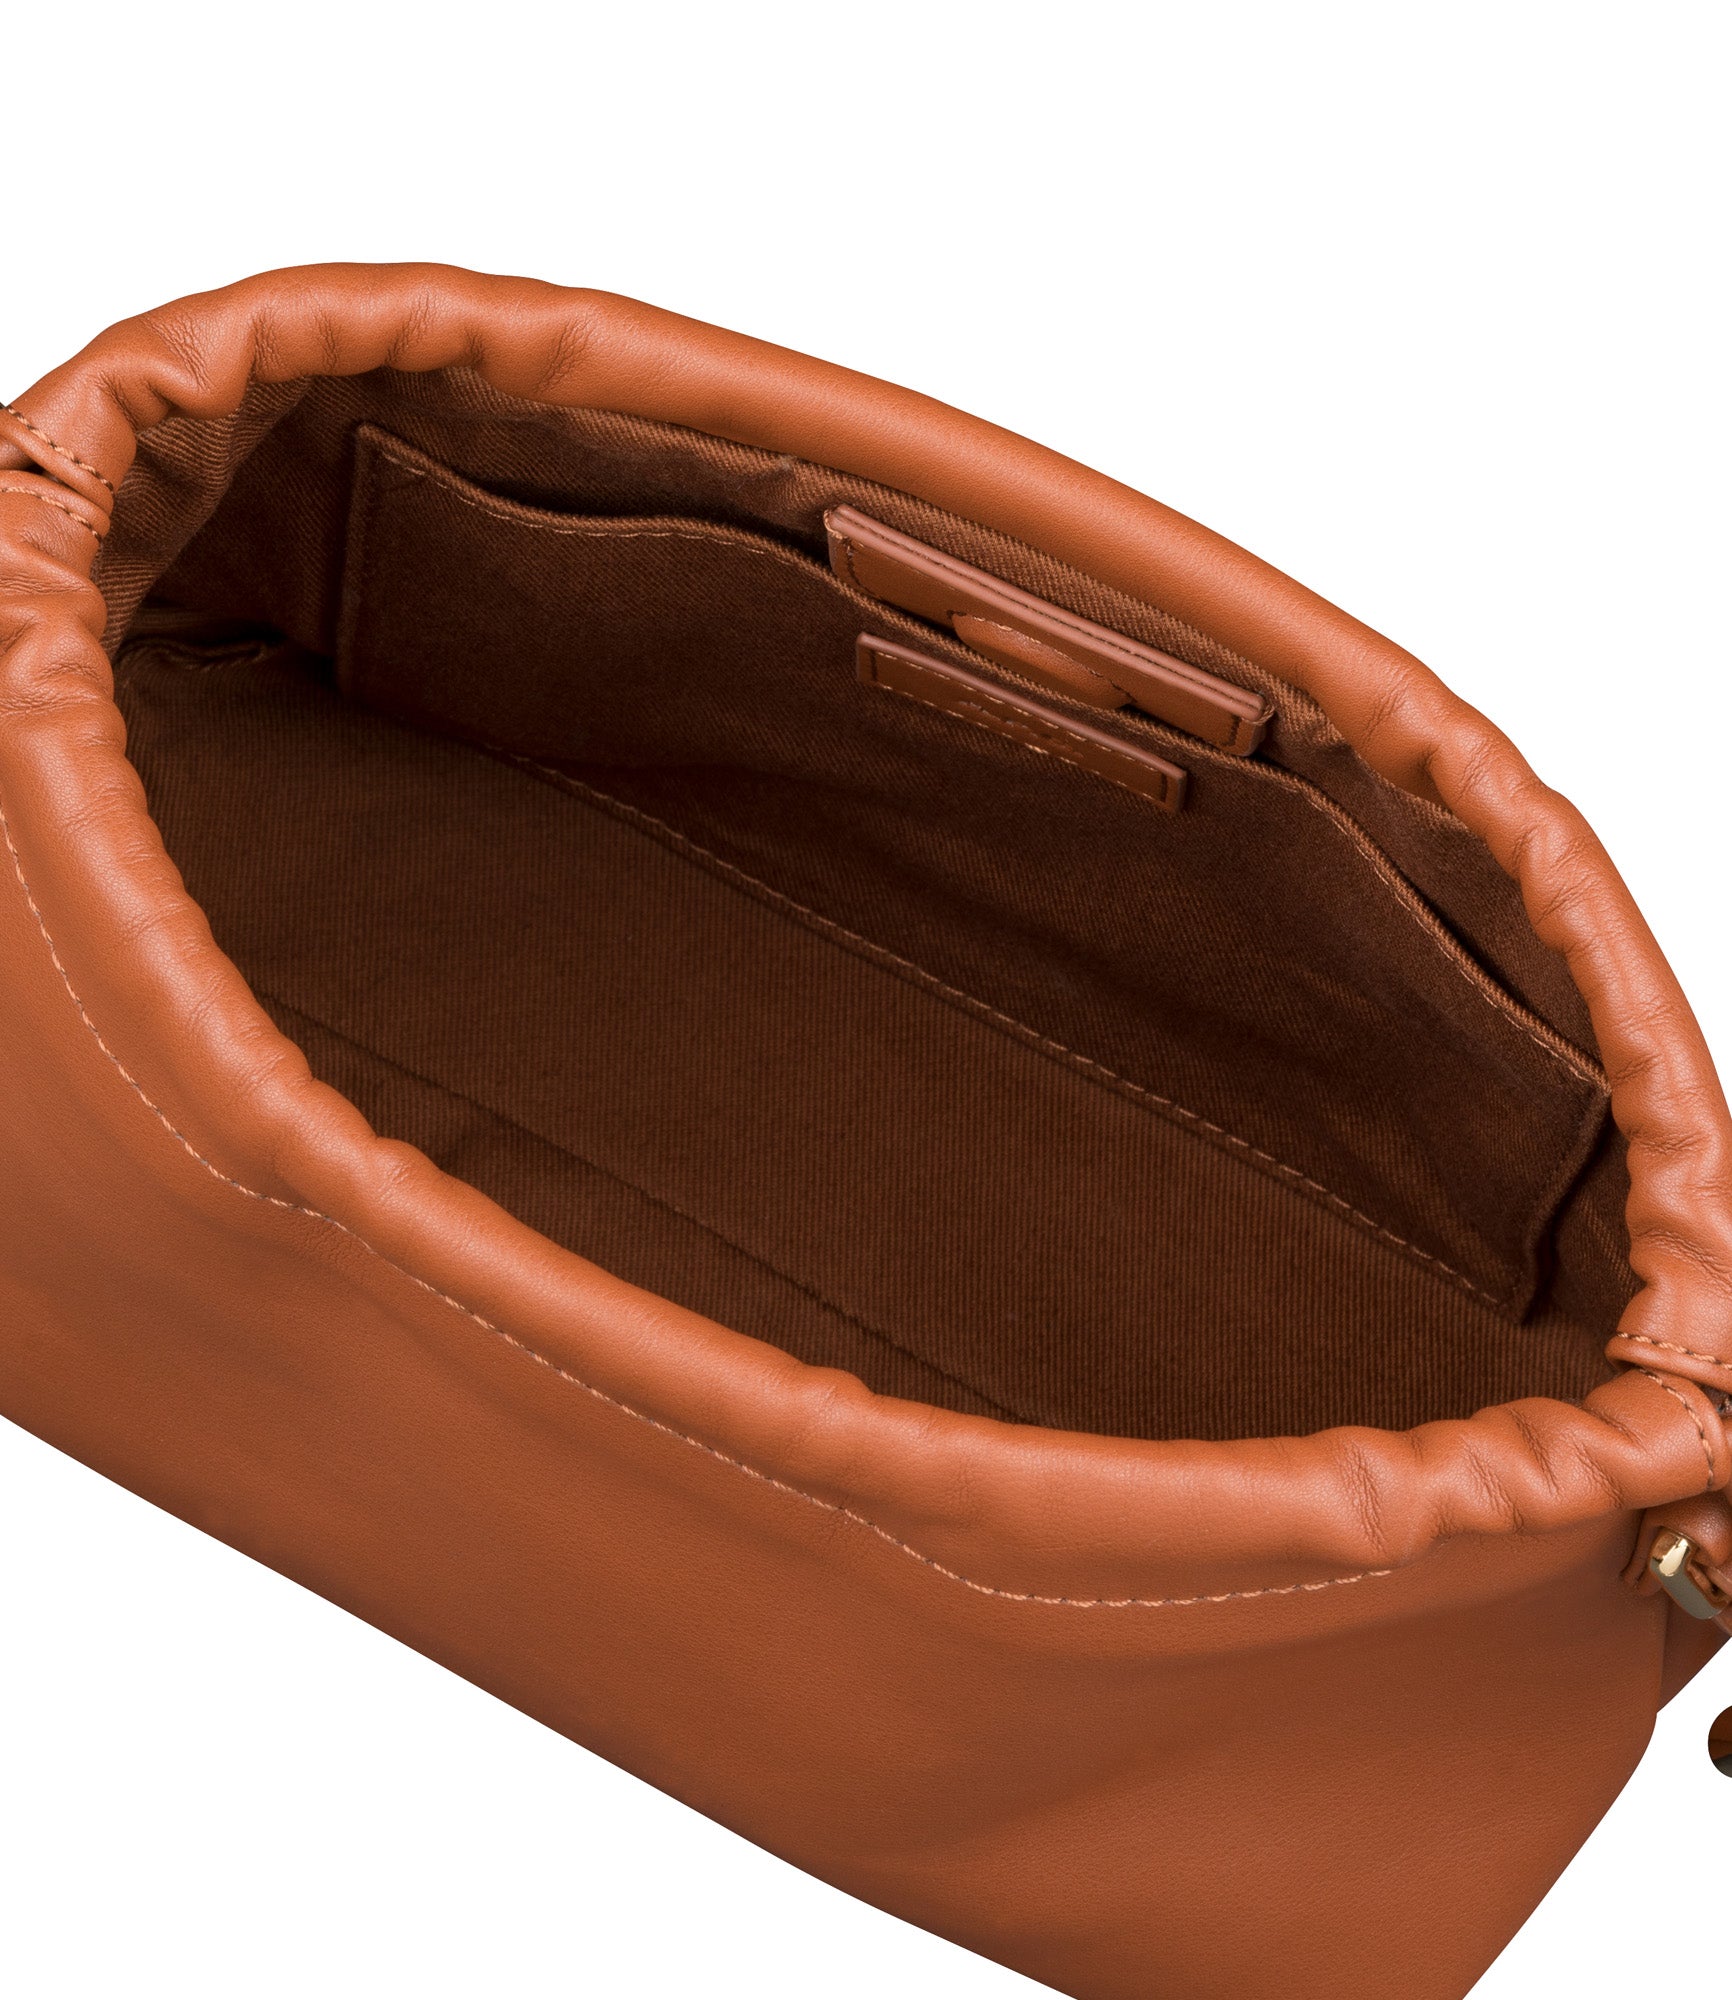 Ninon Mini bag | Small drawstring bag in nut brown recycled 